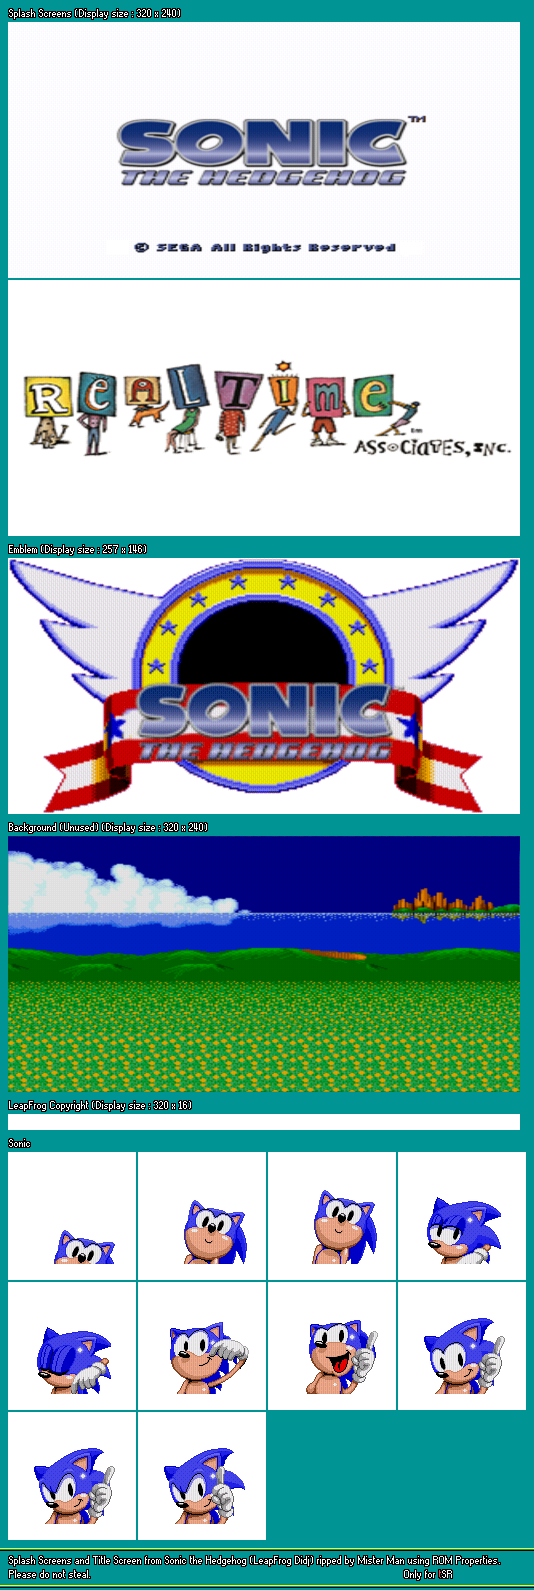 Sonic the Hedgehog (LeapFrog Didj) - Splash Screens & Title Screen